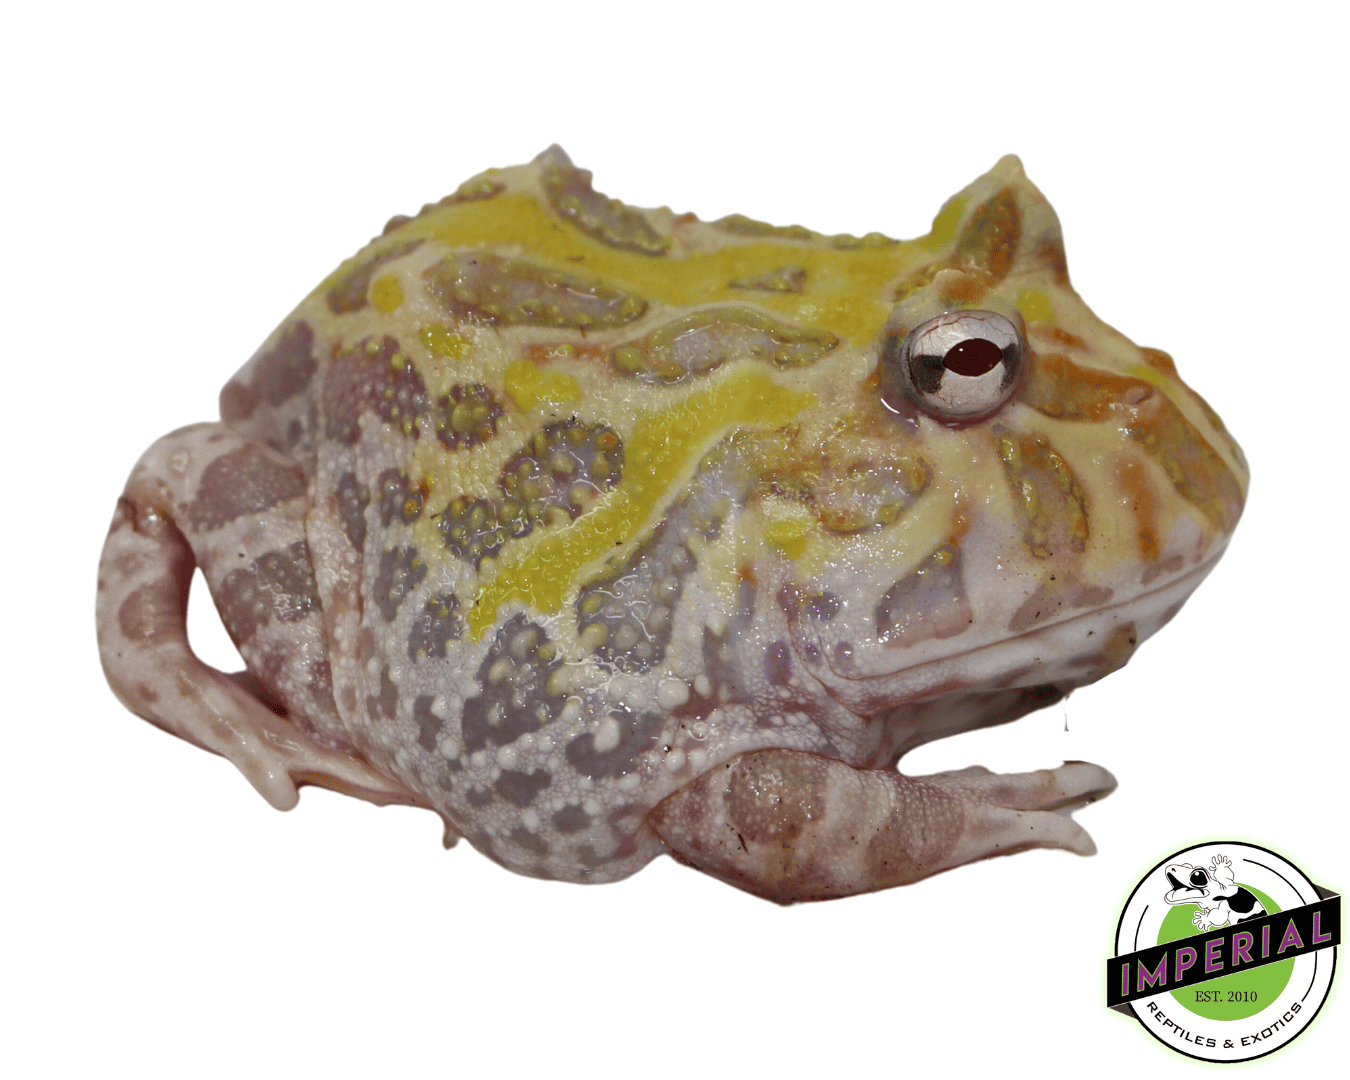 albino mutant pacman frog for sale, buy amphibians online